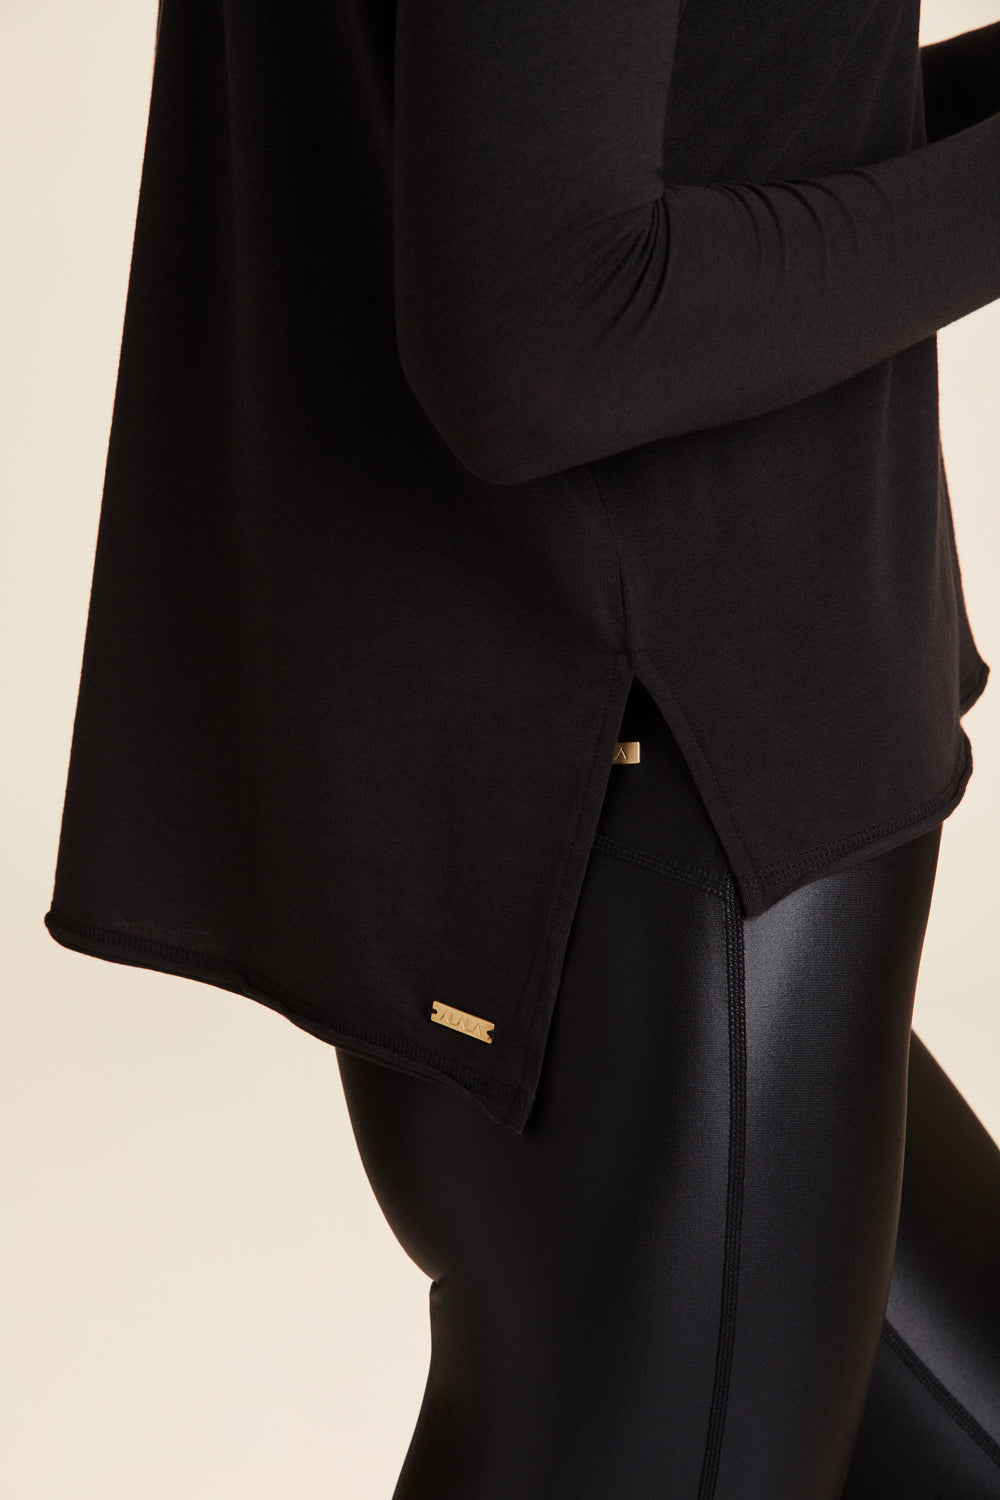 Alala women's long sleeve tshirt in black